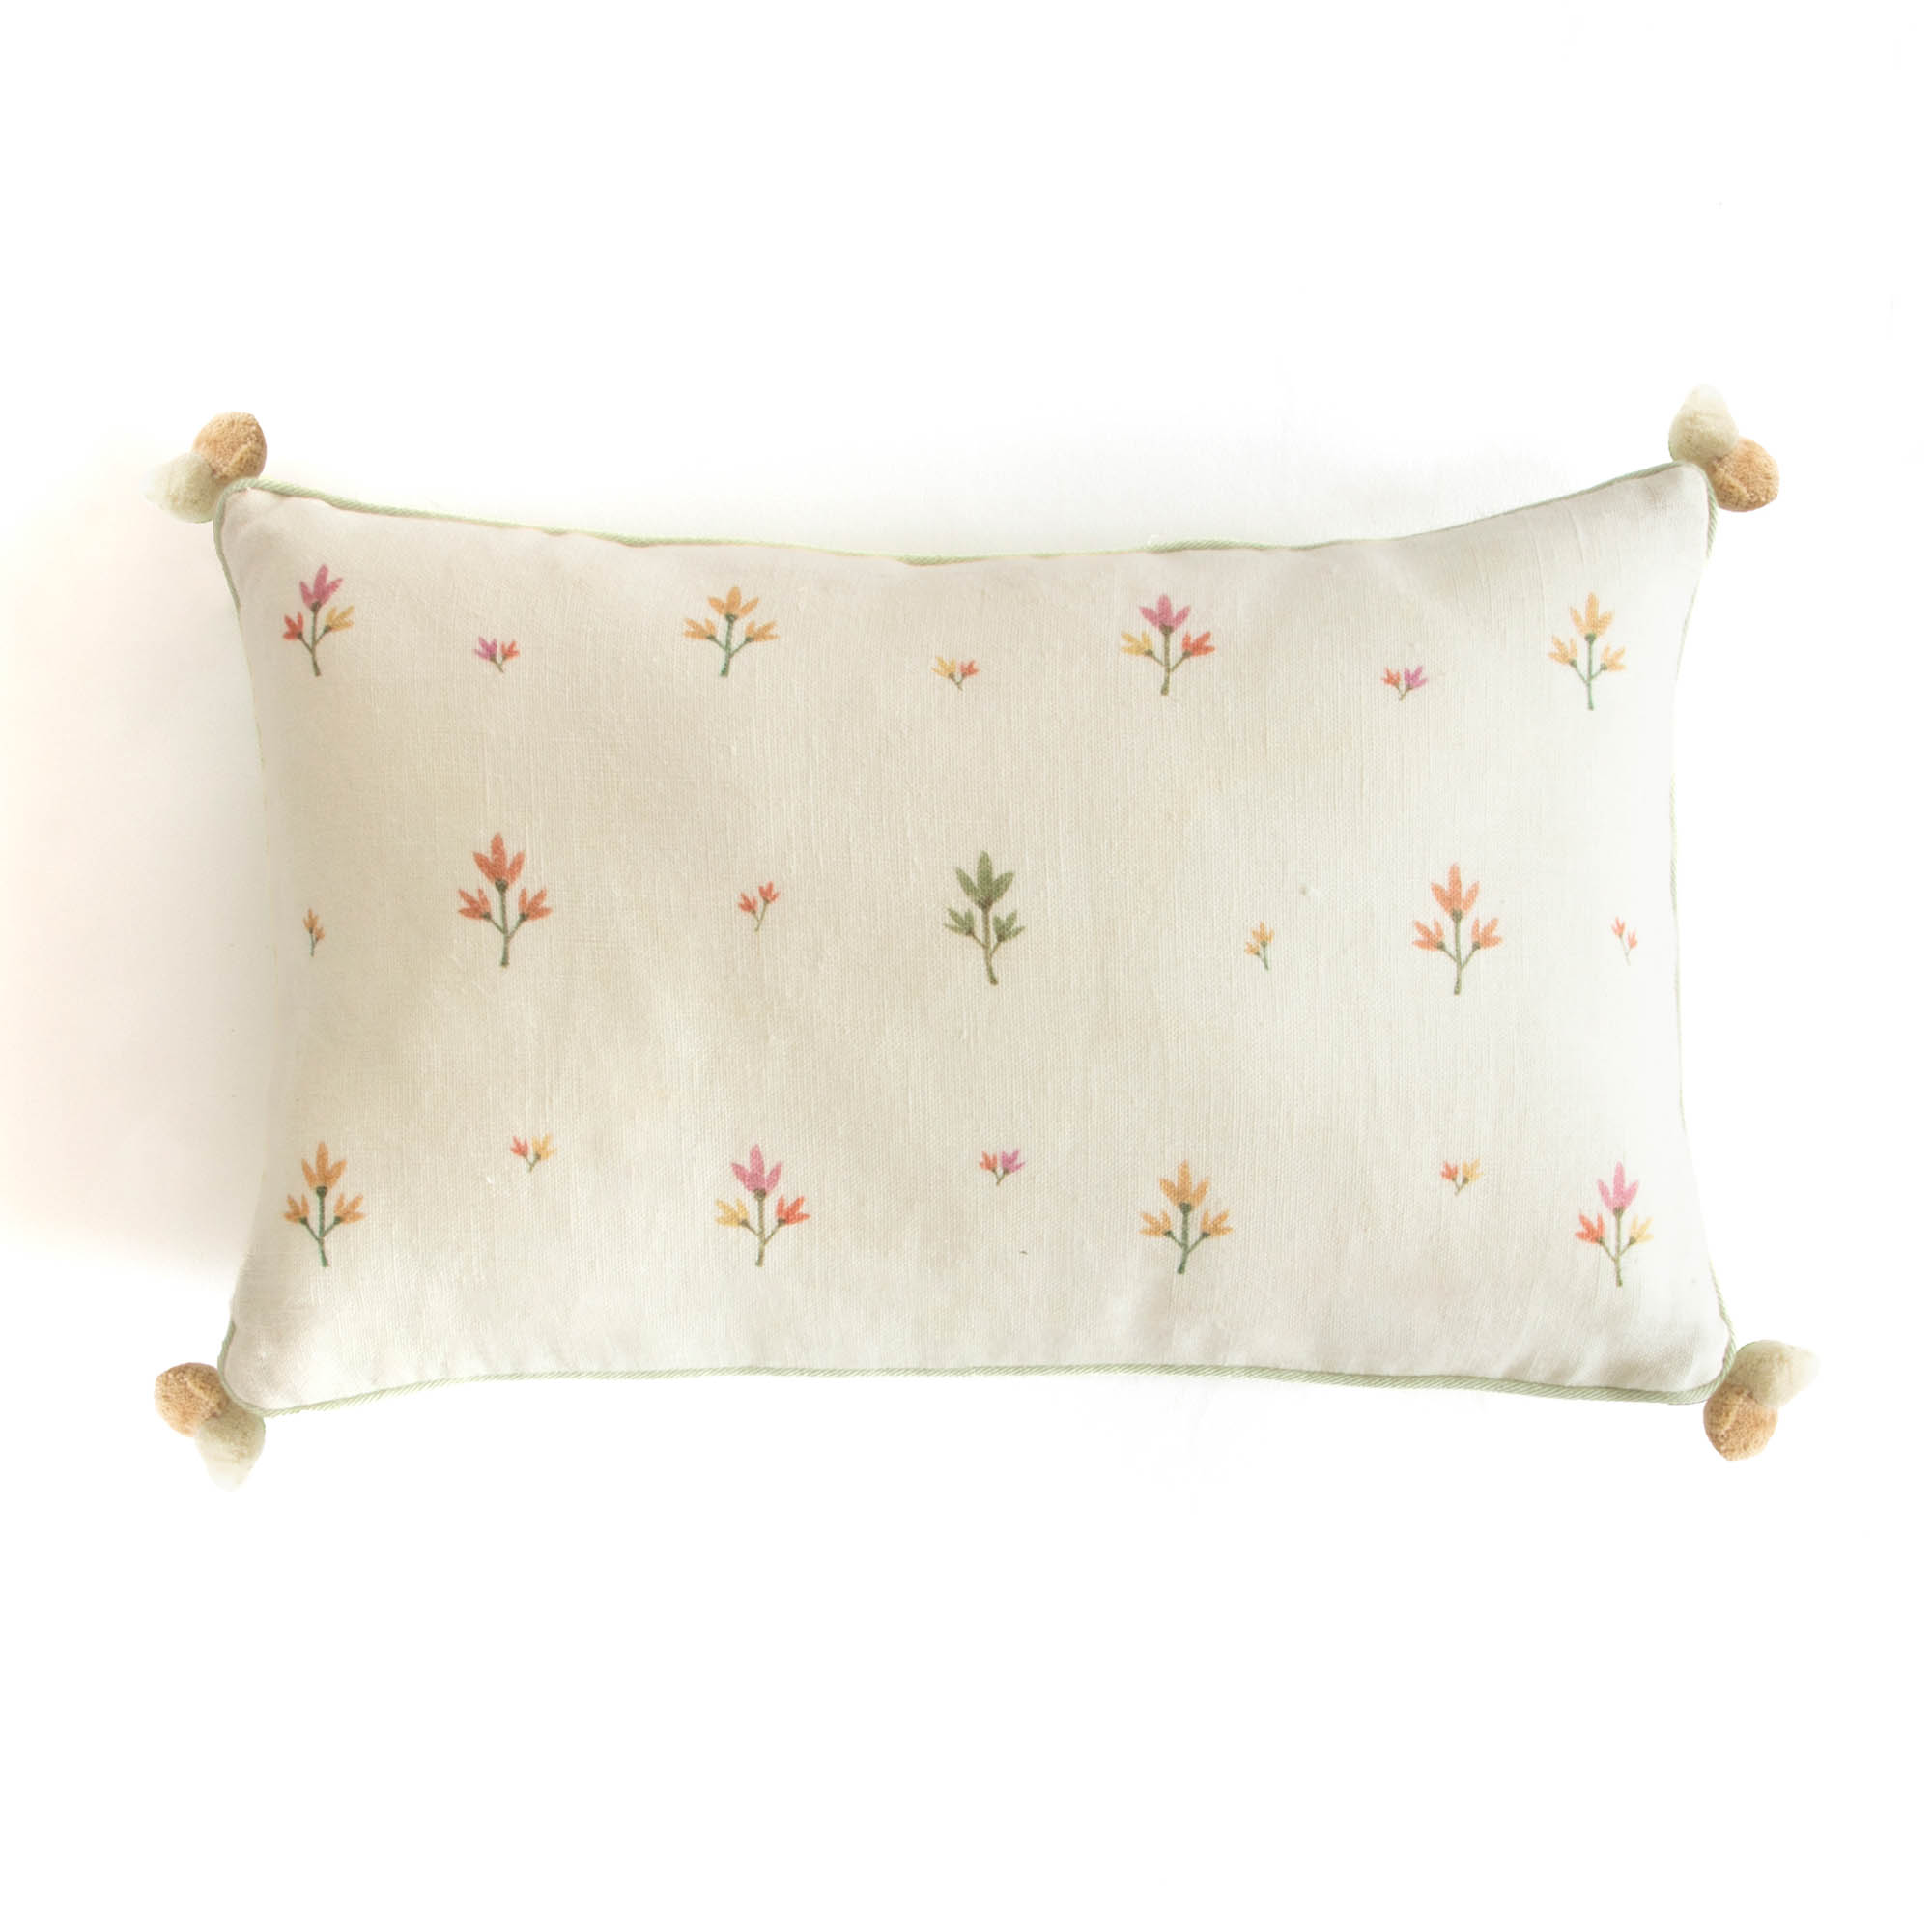 Dreamy Saps in Flower Garden Cushion Cover - Ivory